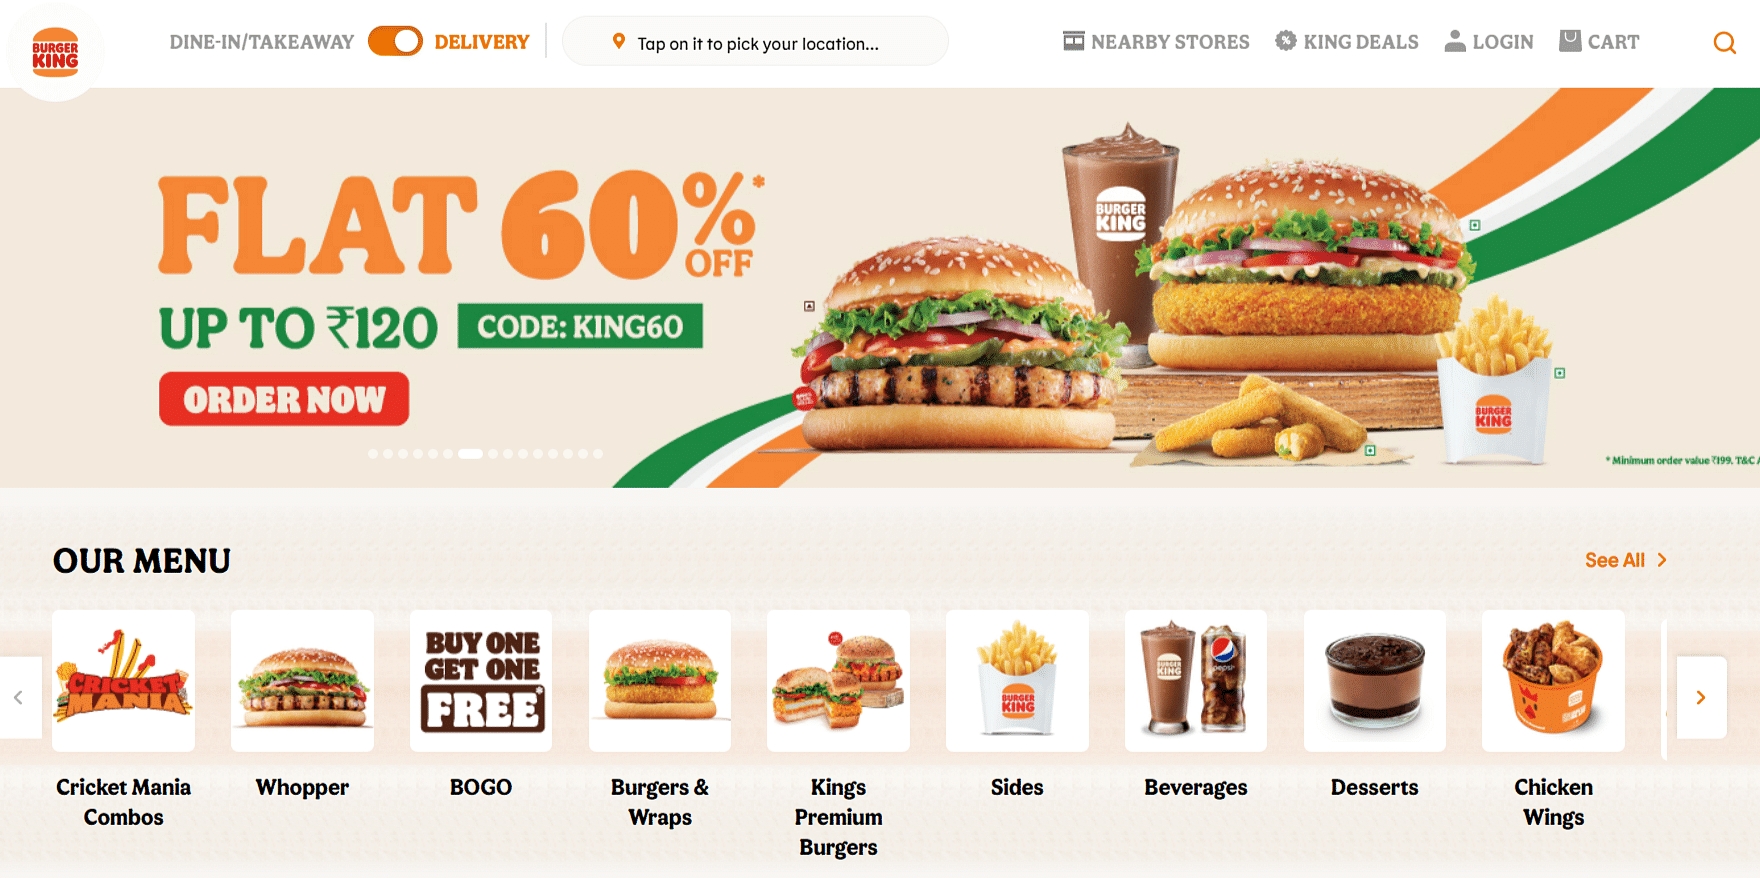 Burger King Discount Code